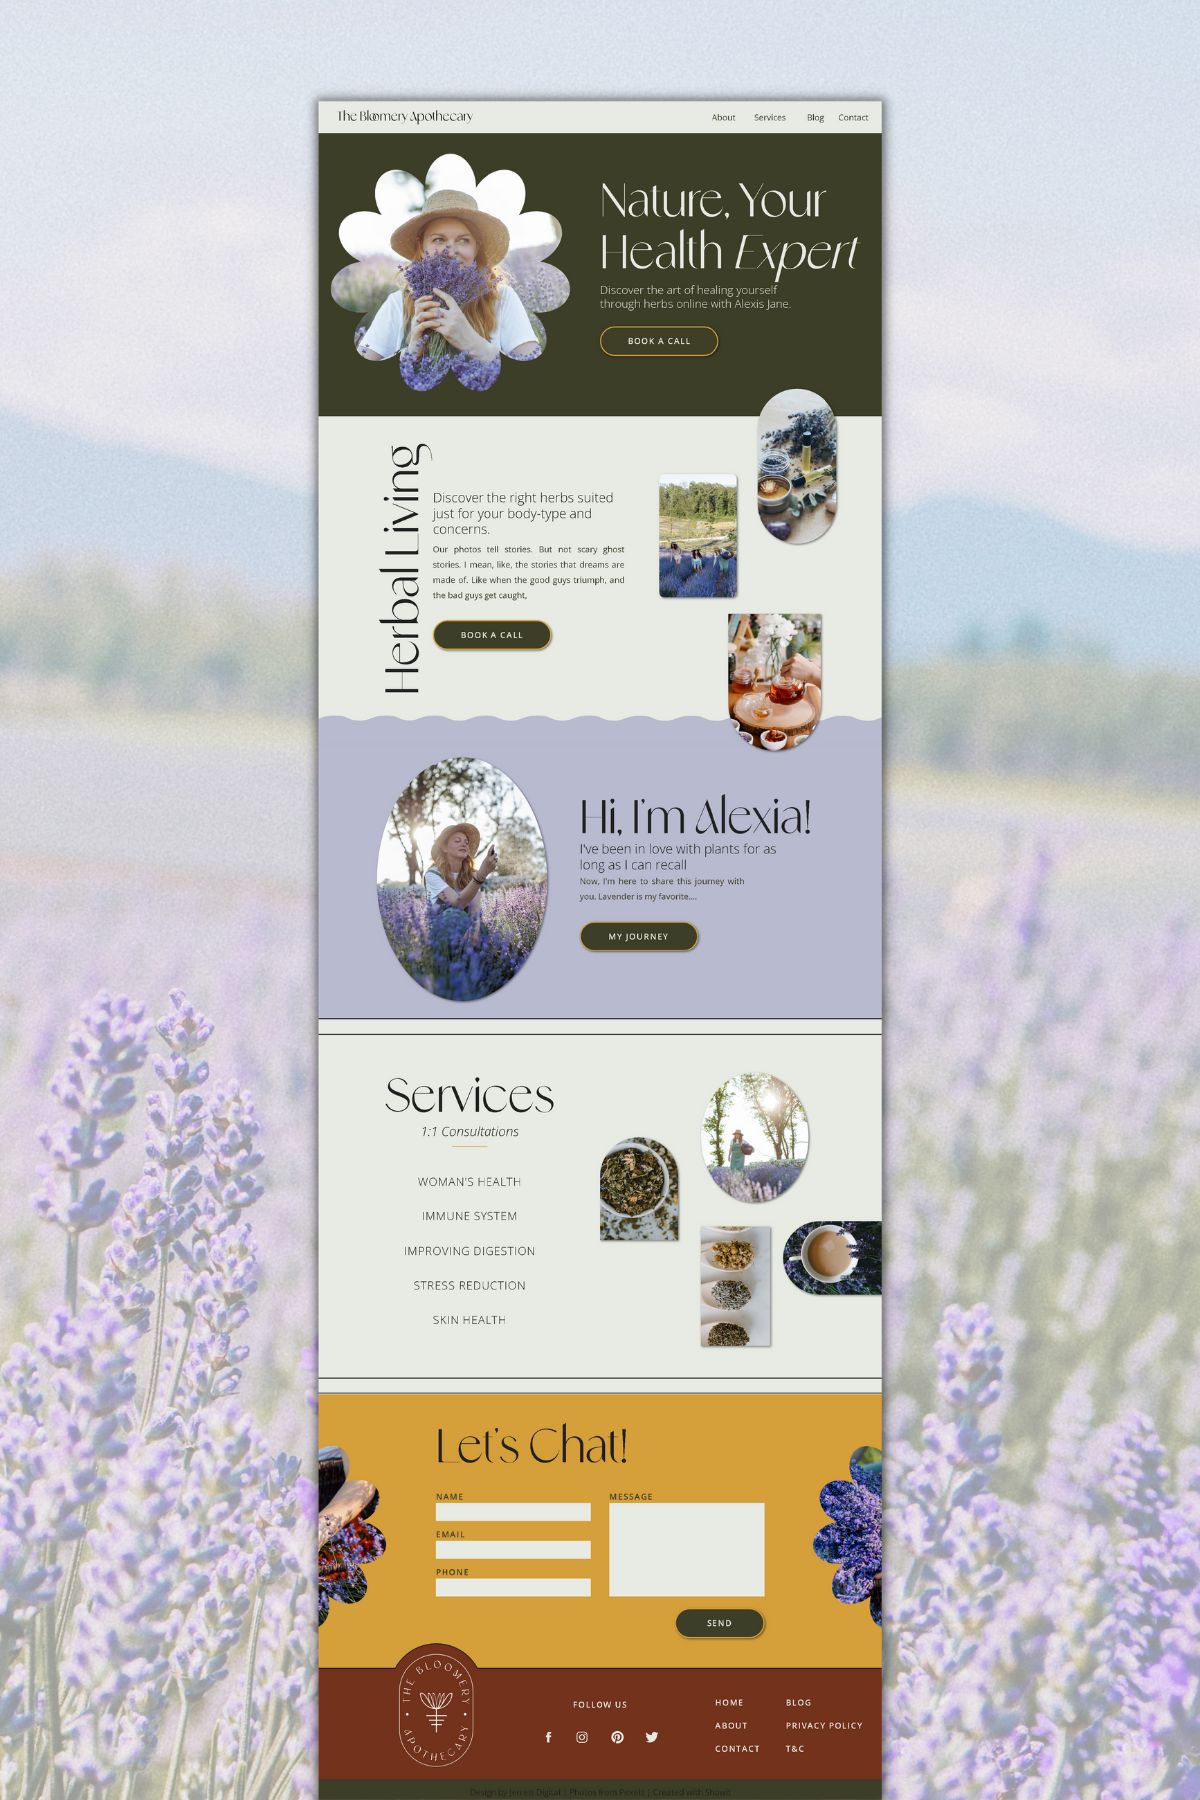 8viIE8hBFMN3-Jerrett-Digital-Herbalist-Brand-And-Web-Design